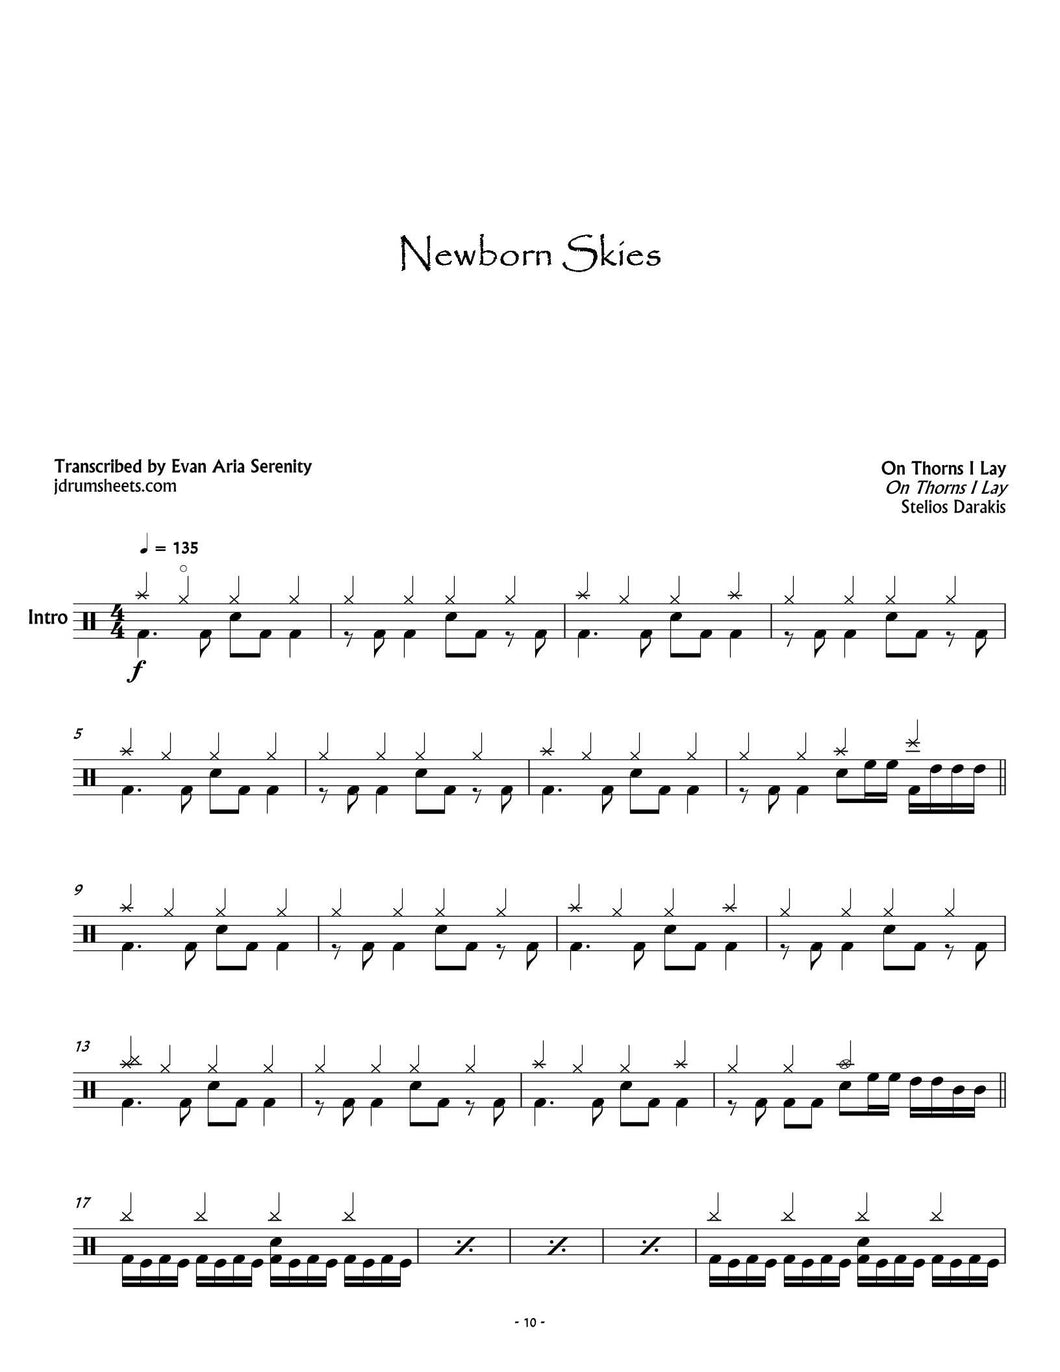 Newborn Skies - On Thorns I Lay - Full Drum Transcription / Drum Sheet Music - Jaslow Drum Sheets